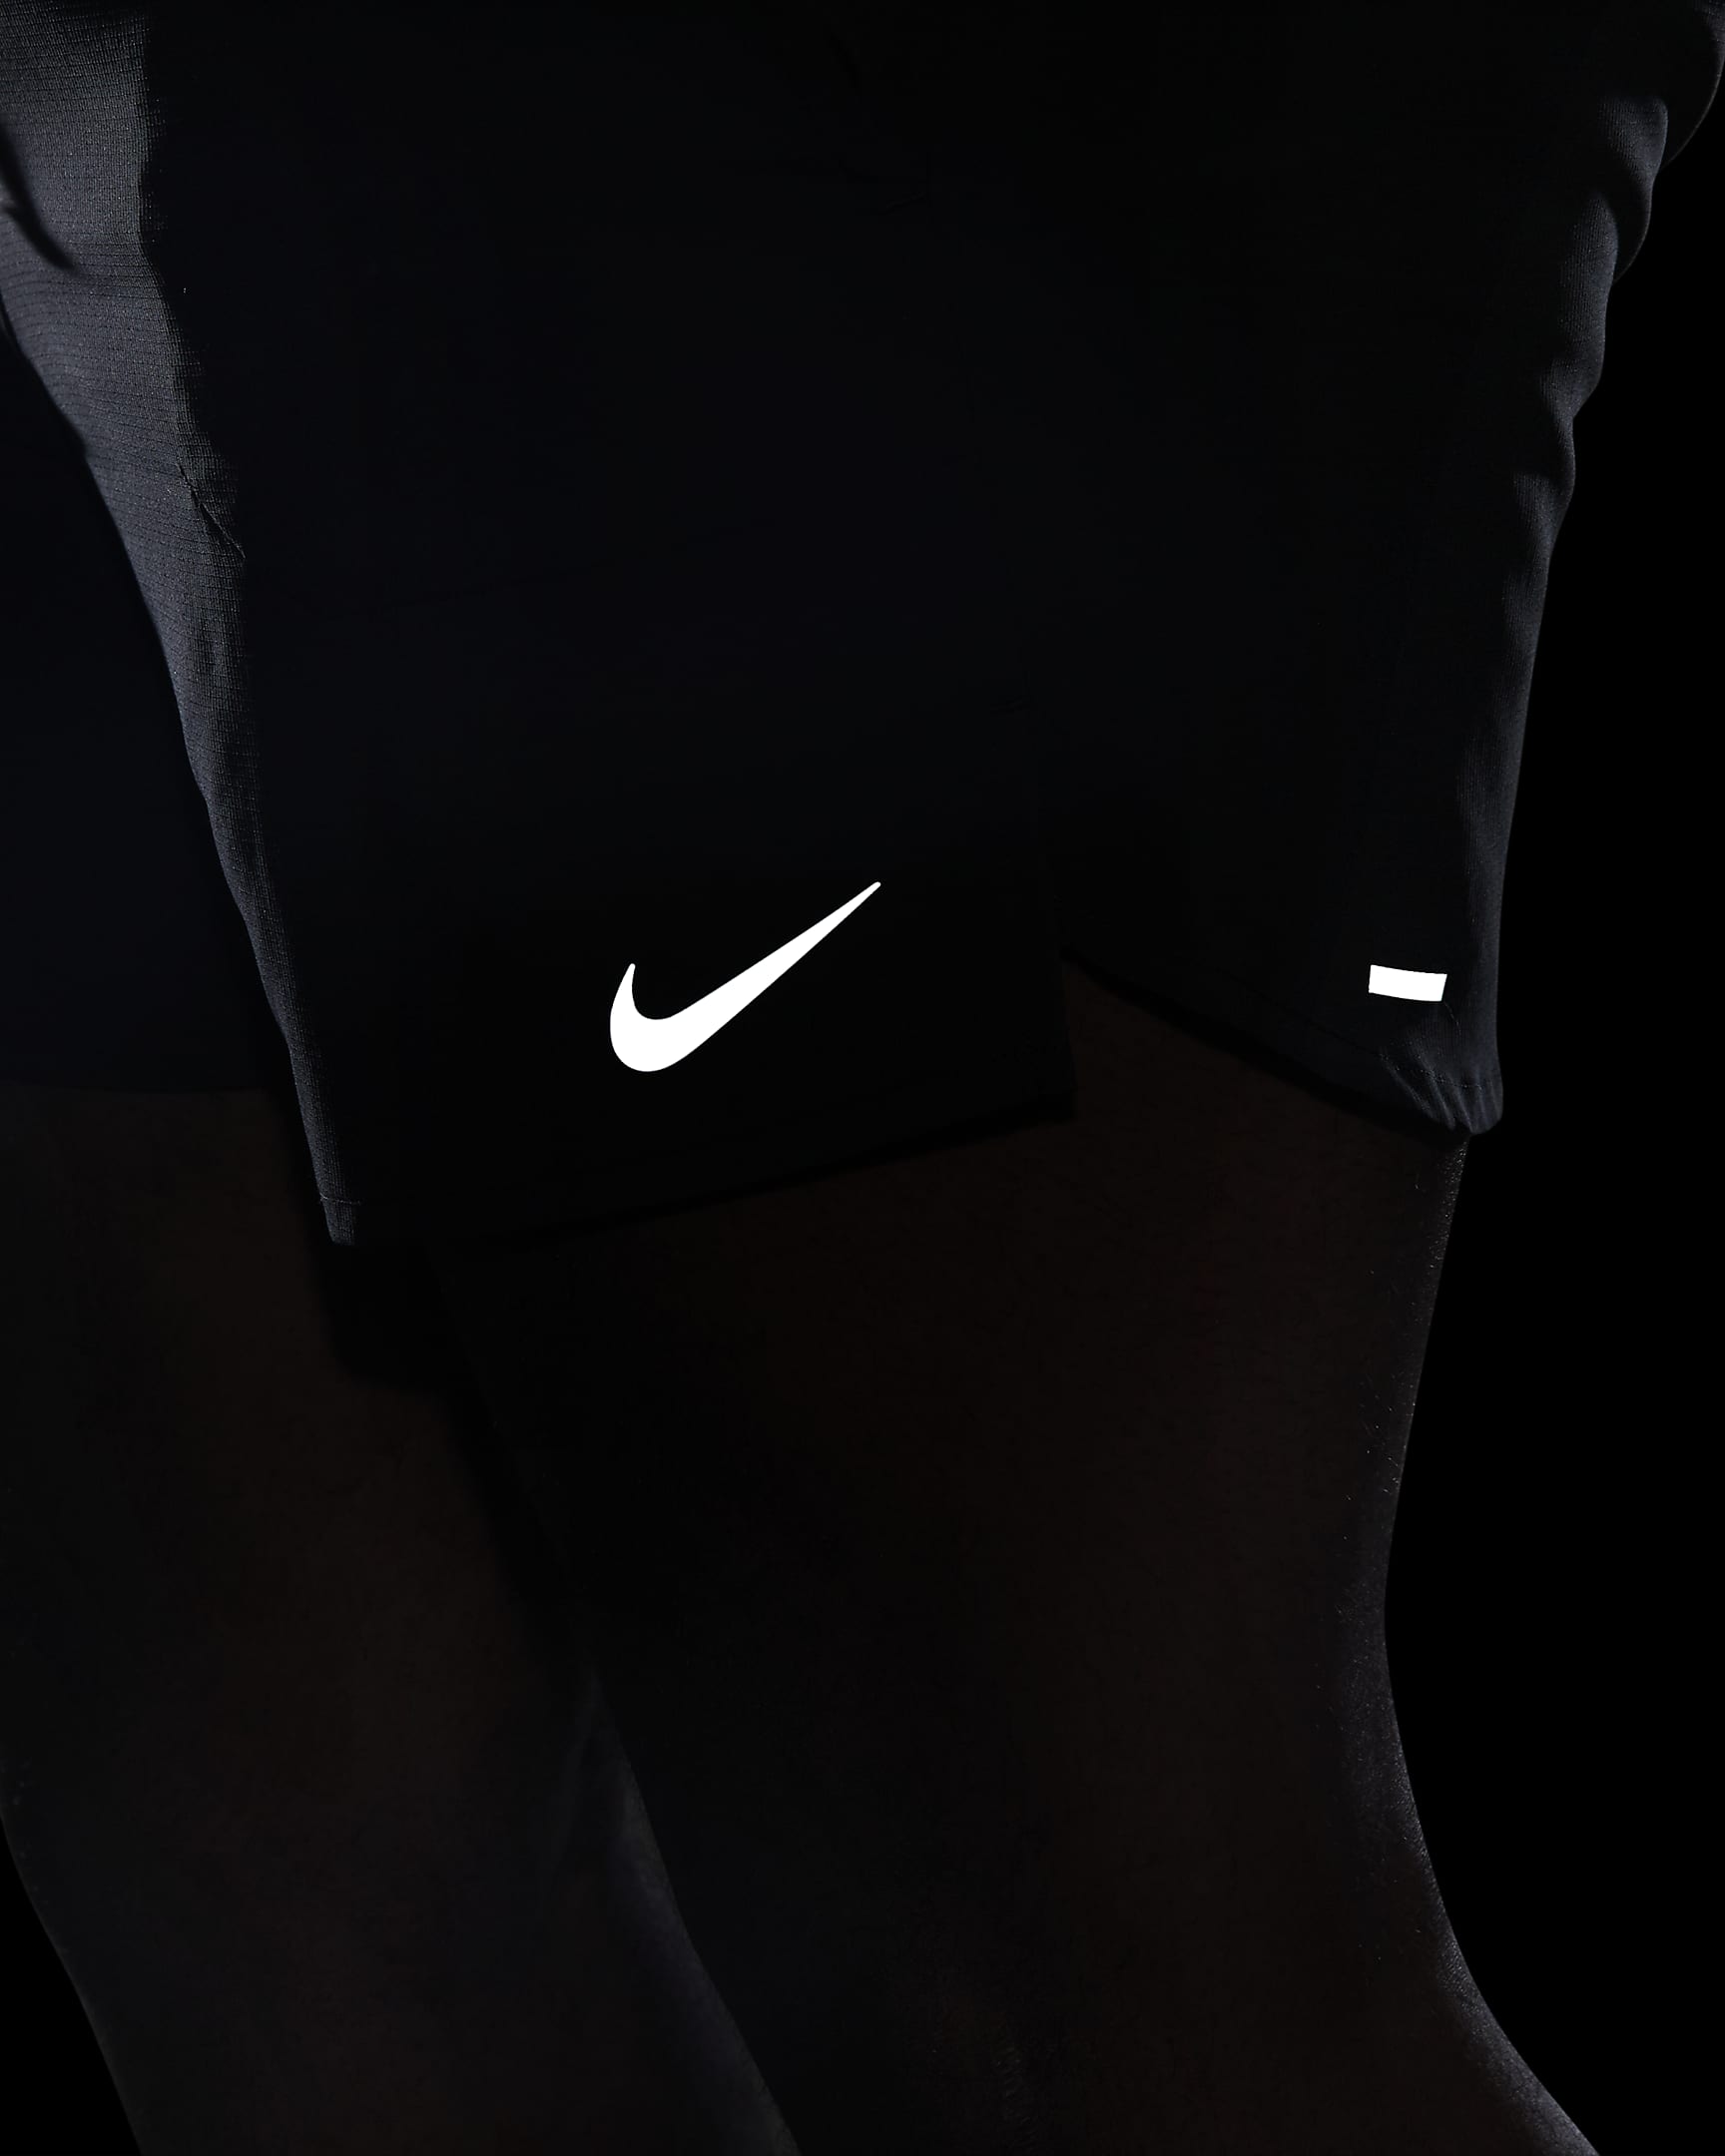 Shorts de running con forro de ropa interior Dri-FIT de 12.5 cm para ...